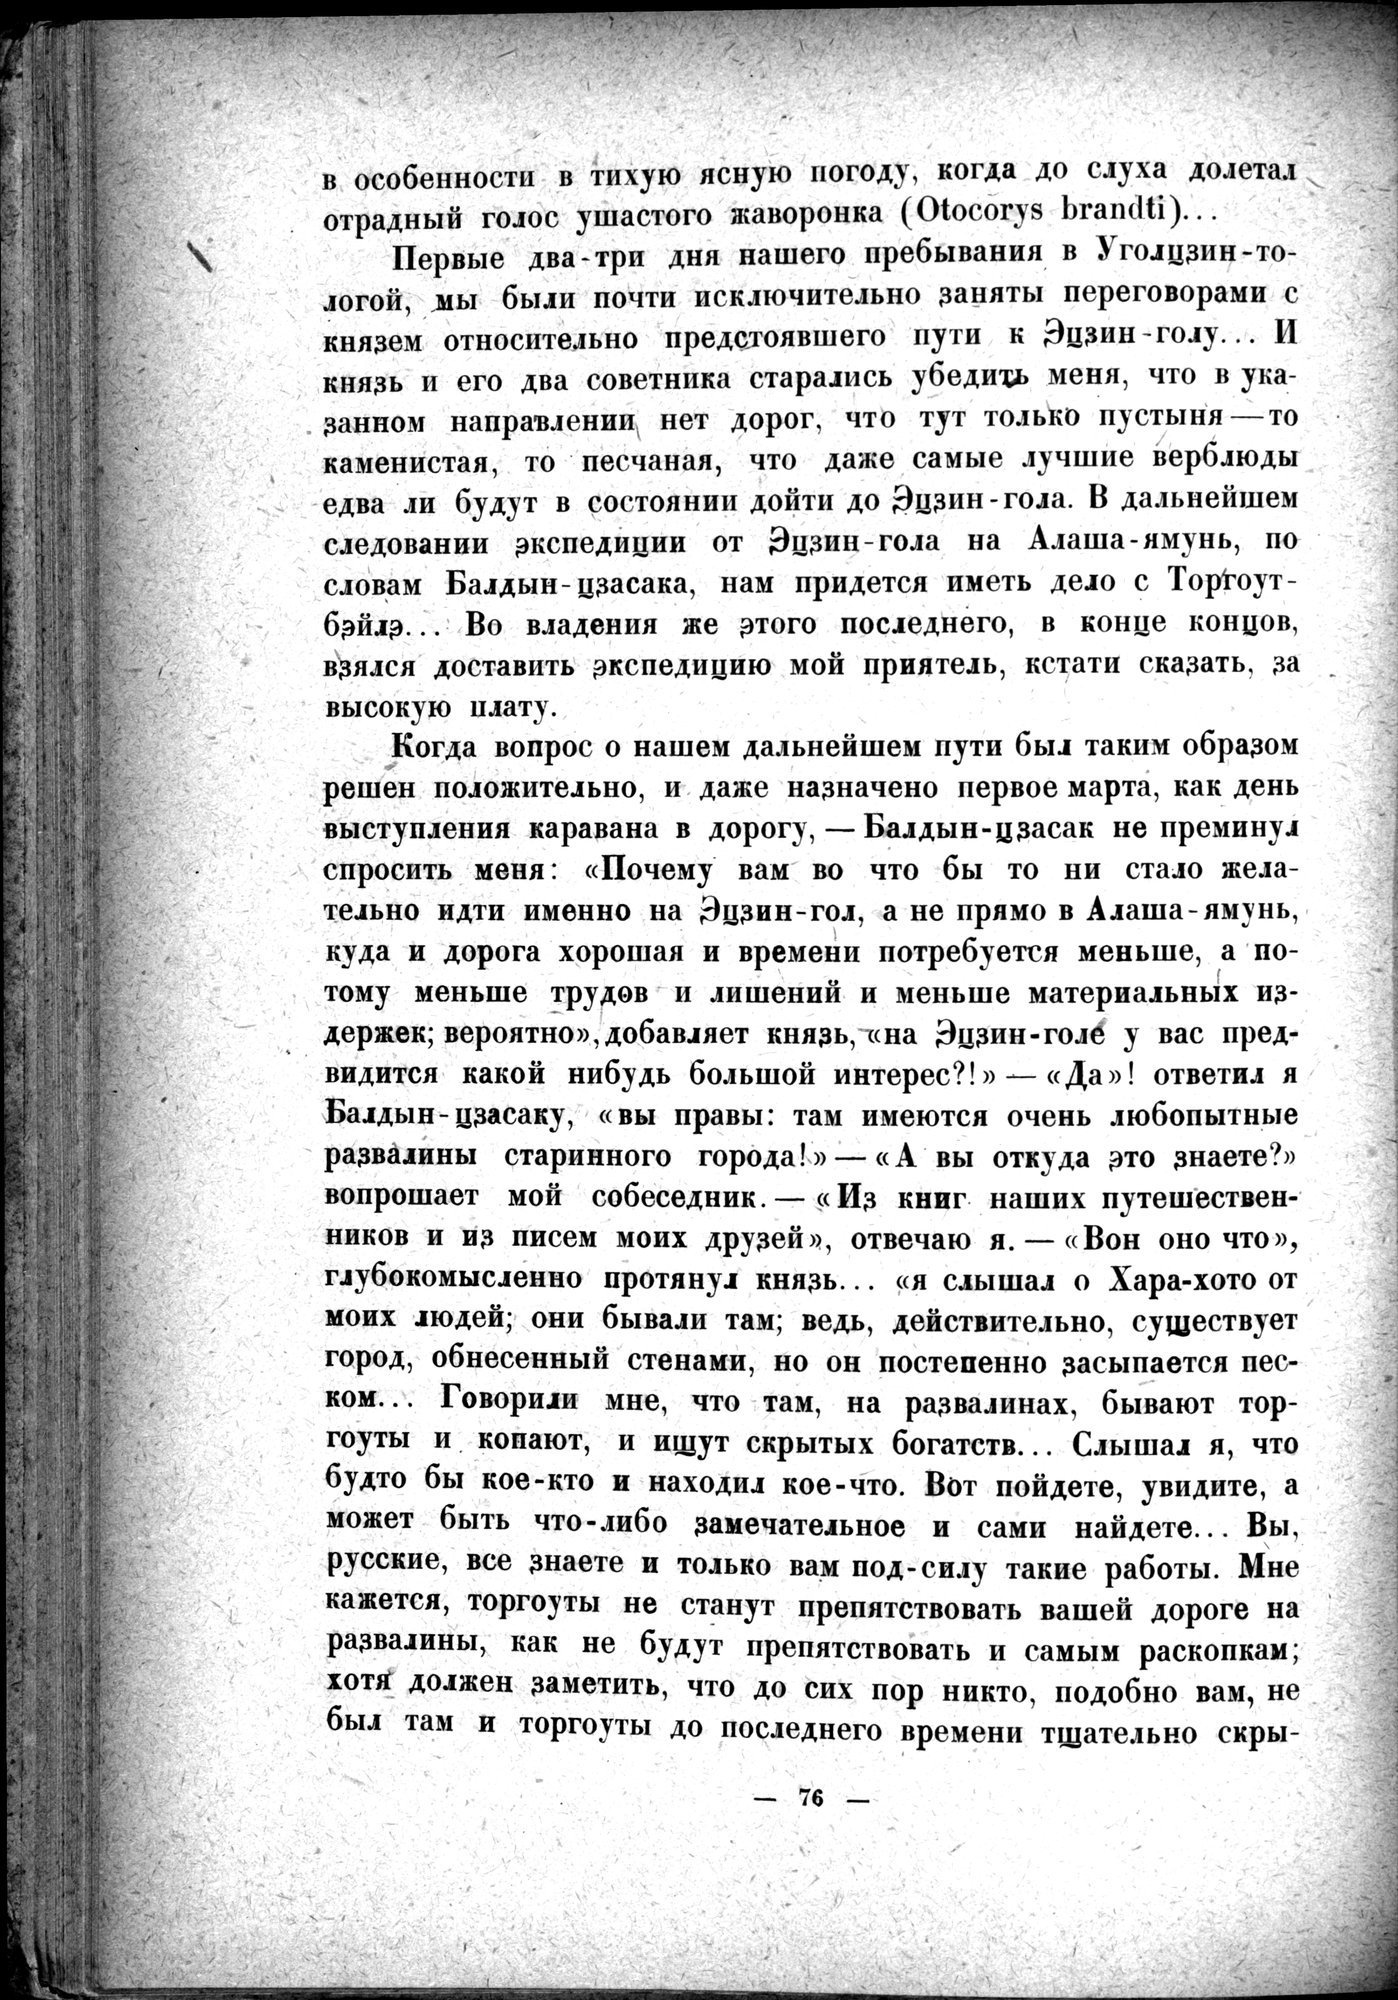 Mongoliya i Amdo i mertby gorod Khara-Khoto : vol.1 / Page 100 (Grayscale High Resolution Image)